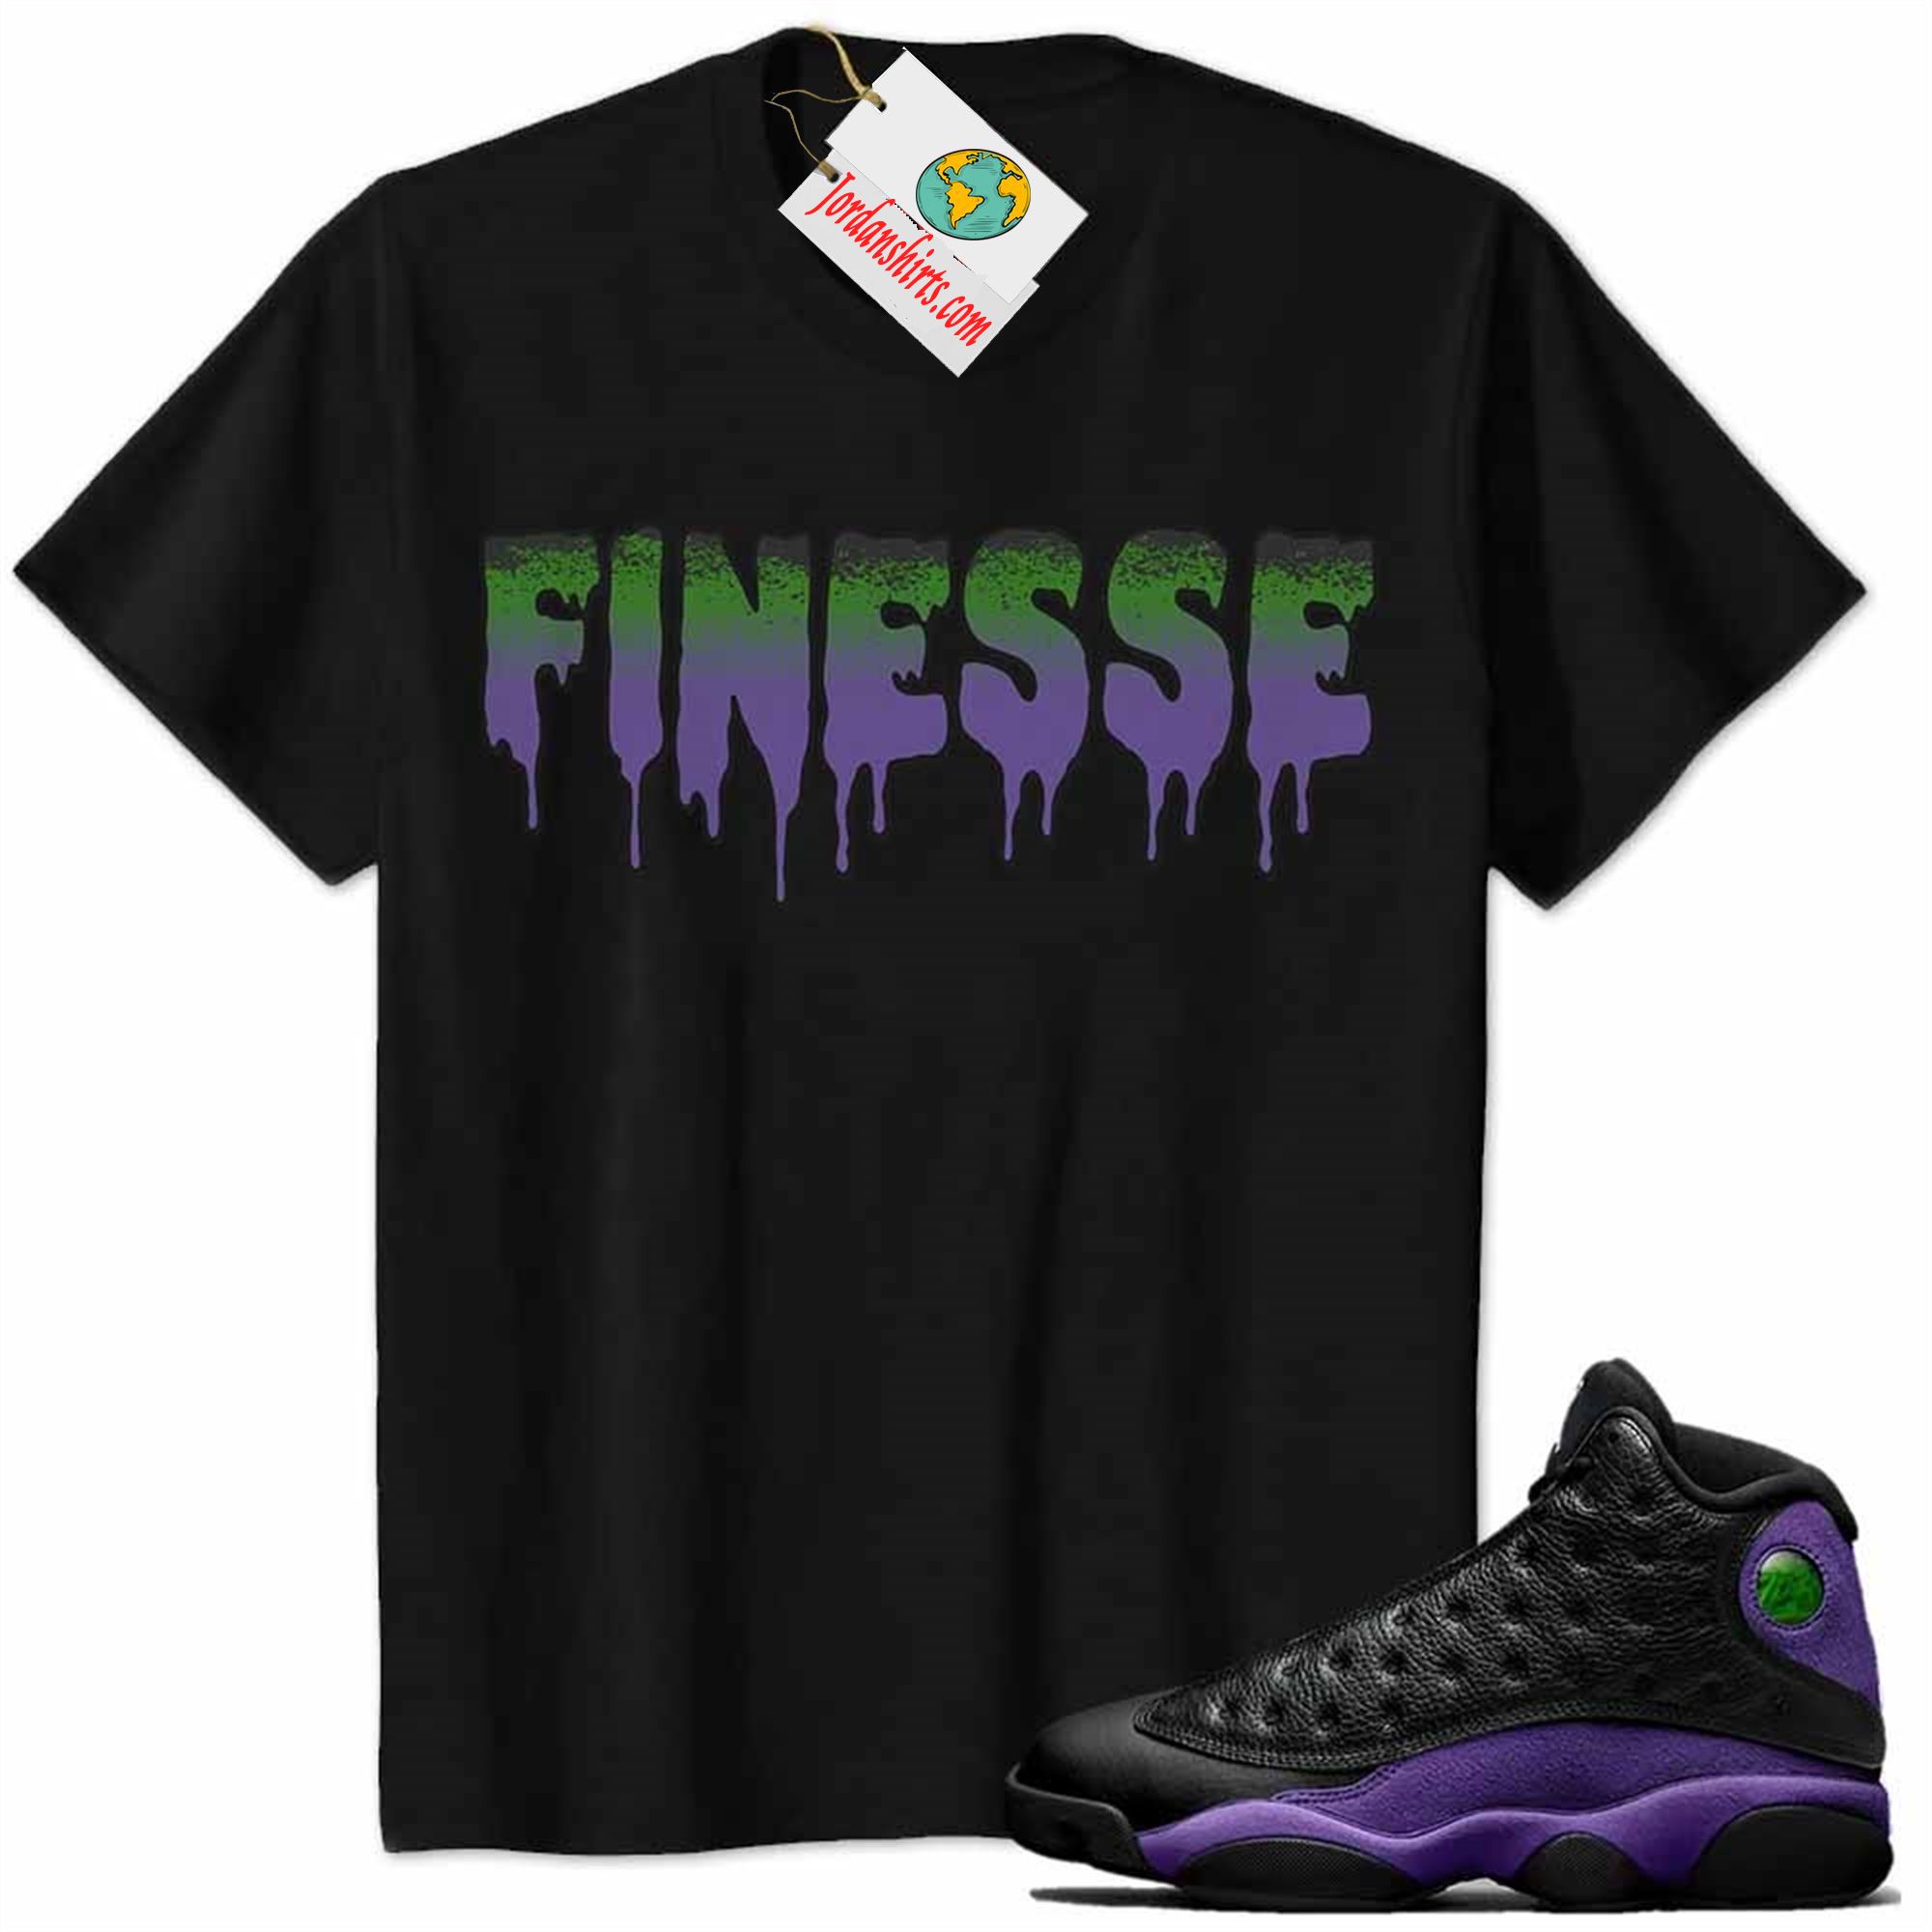 Jordan 13 Shirt, Jordan 13 Court Purple Shirt Finesse Drip Black Plus Size Up To 5xl